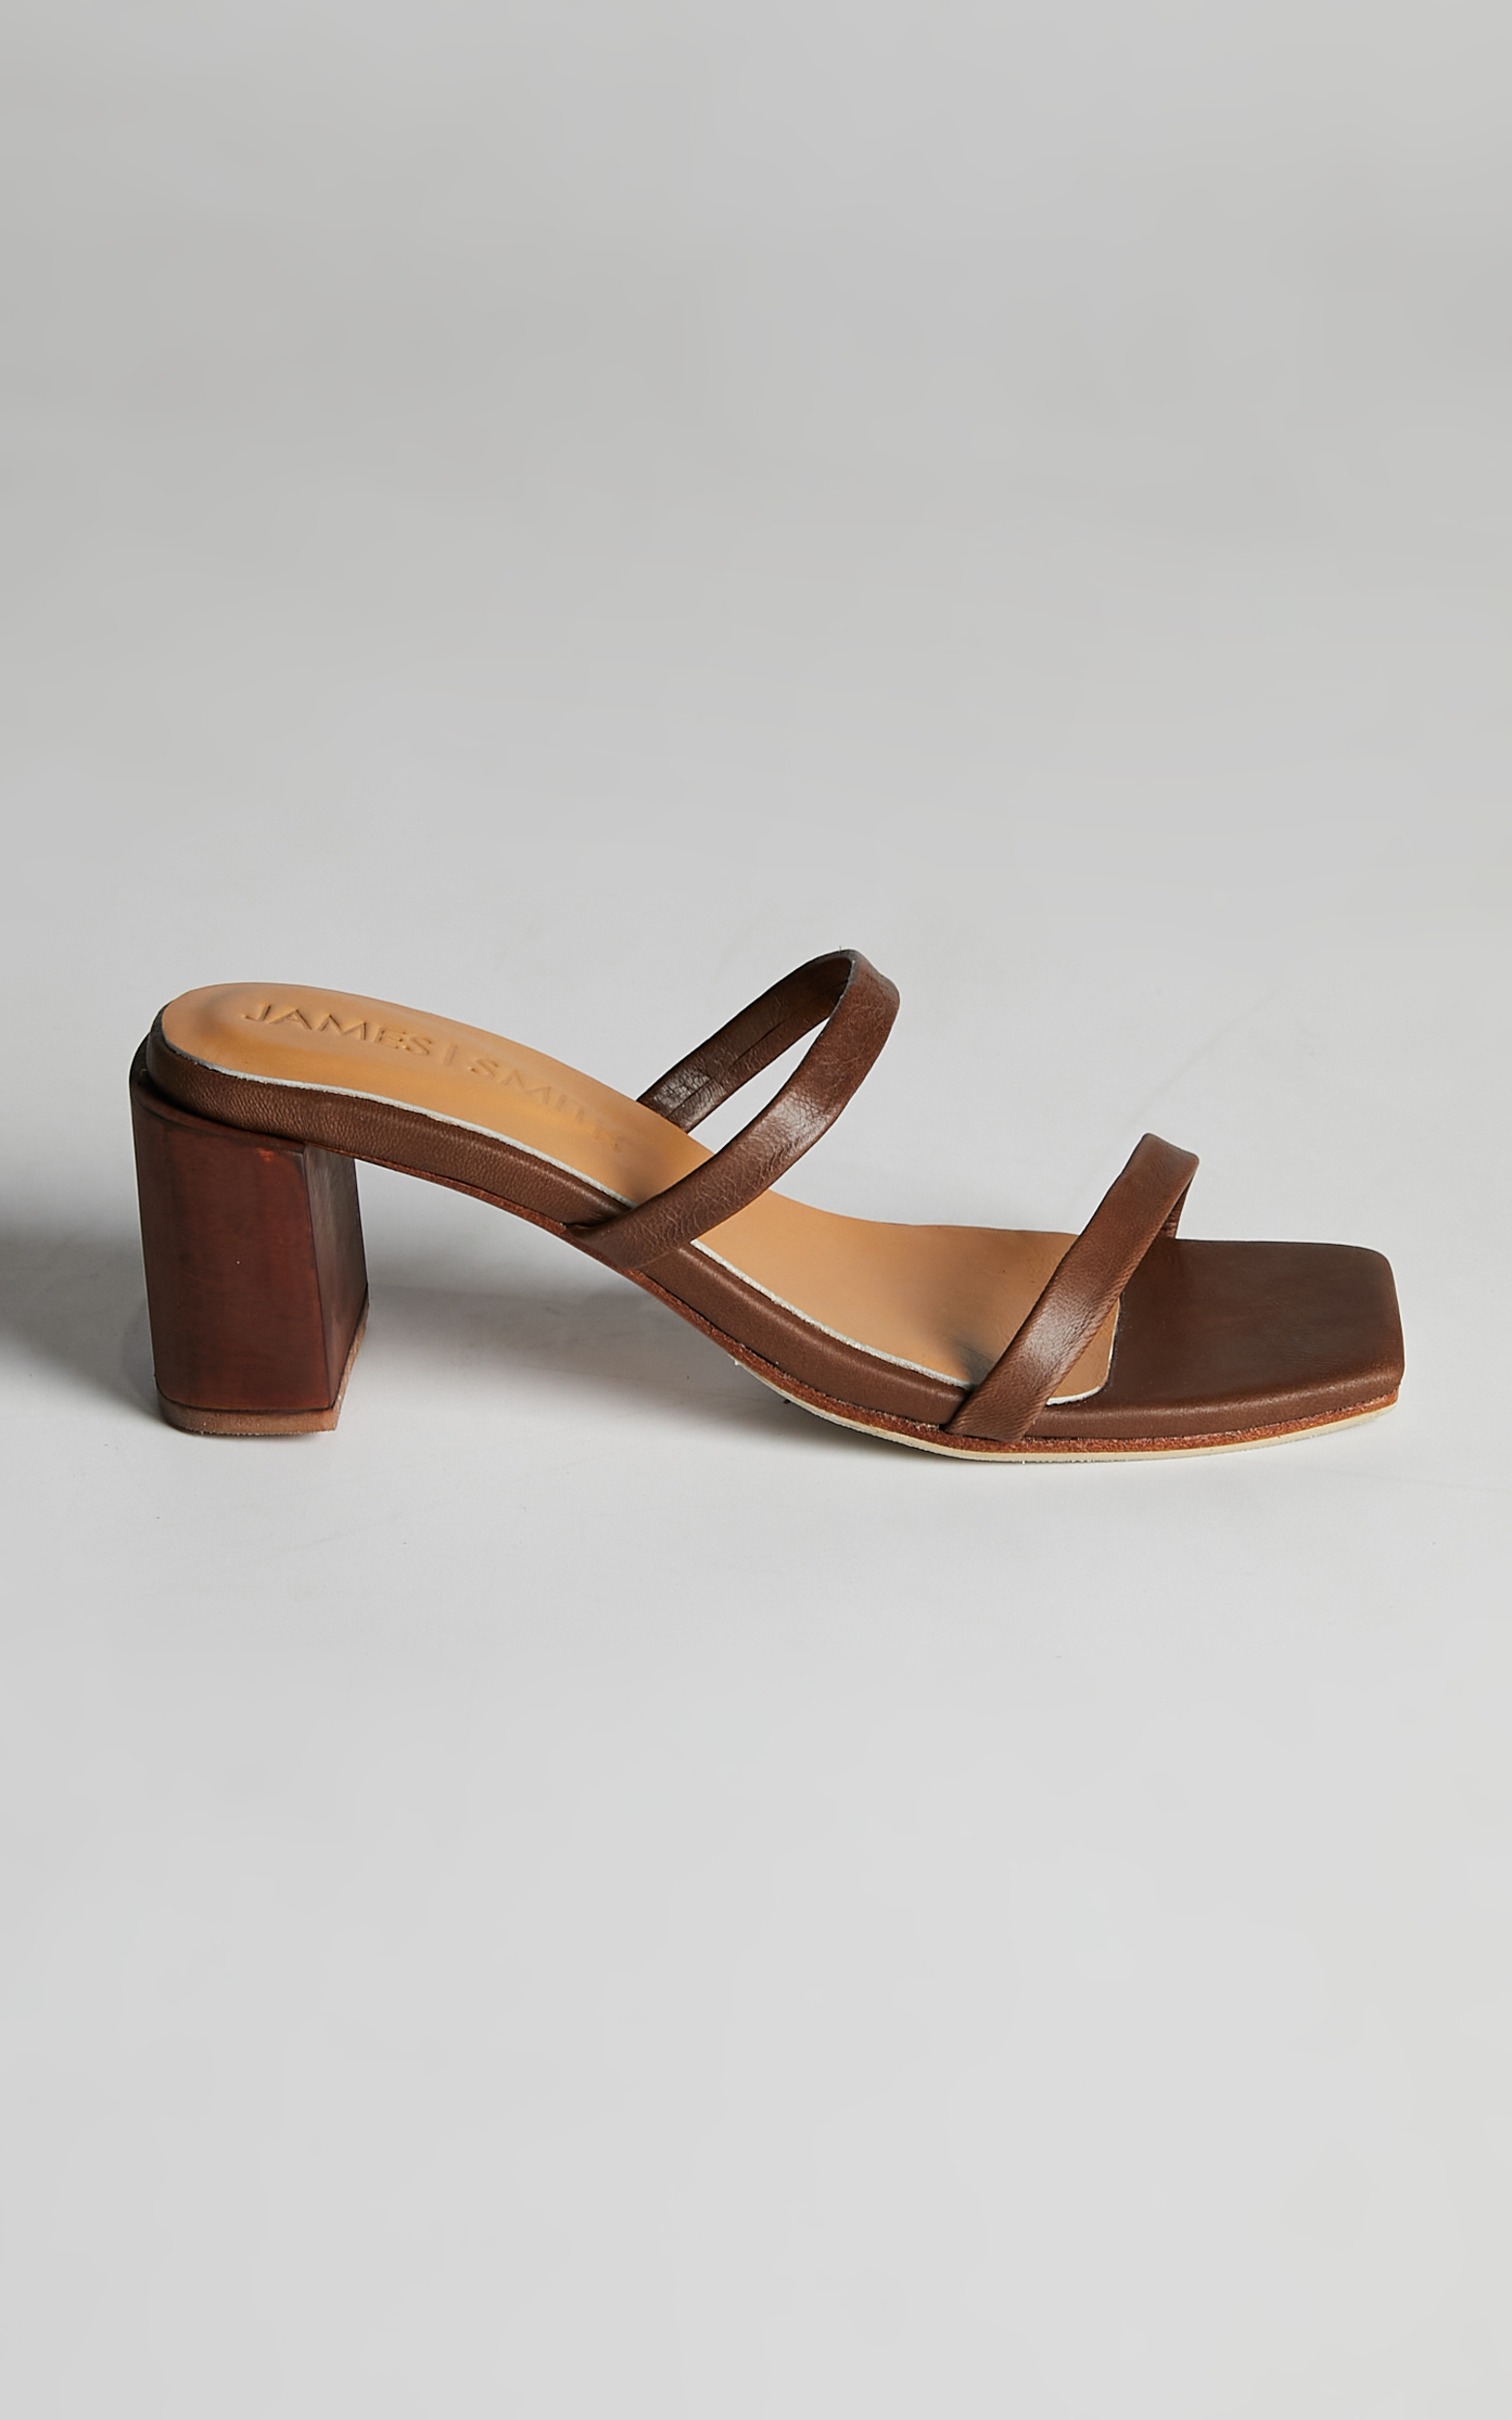 James Smith - Sirenuse Strap Sandal in Vintage Brown - 05, BRN2, hi-res image number null